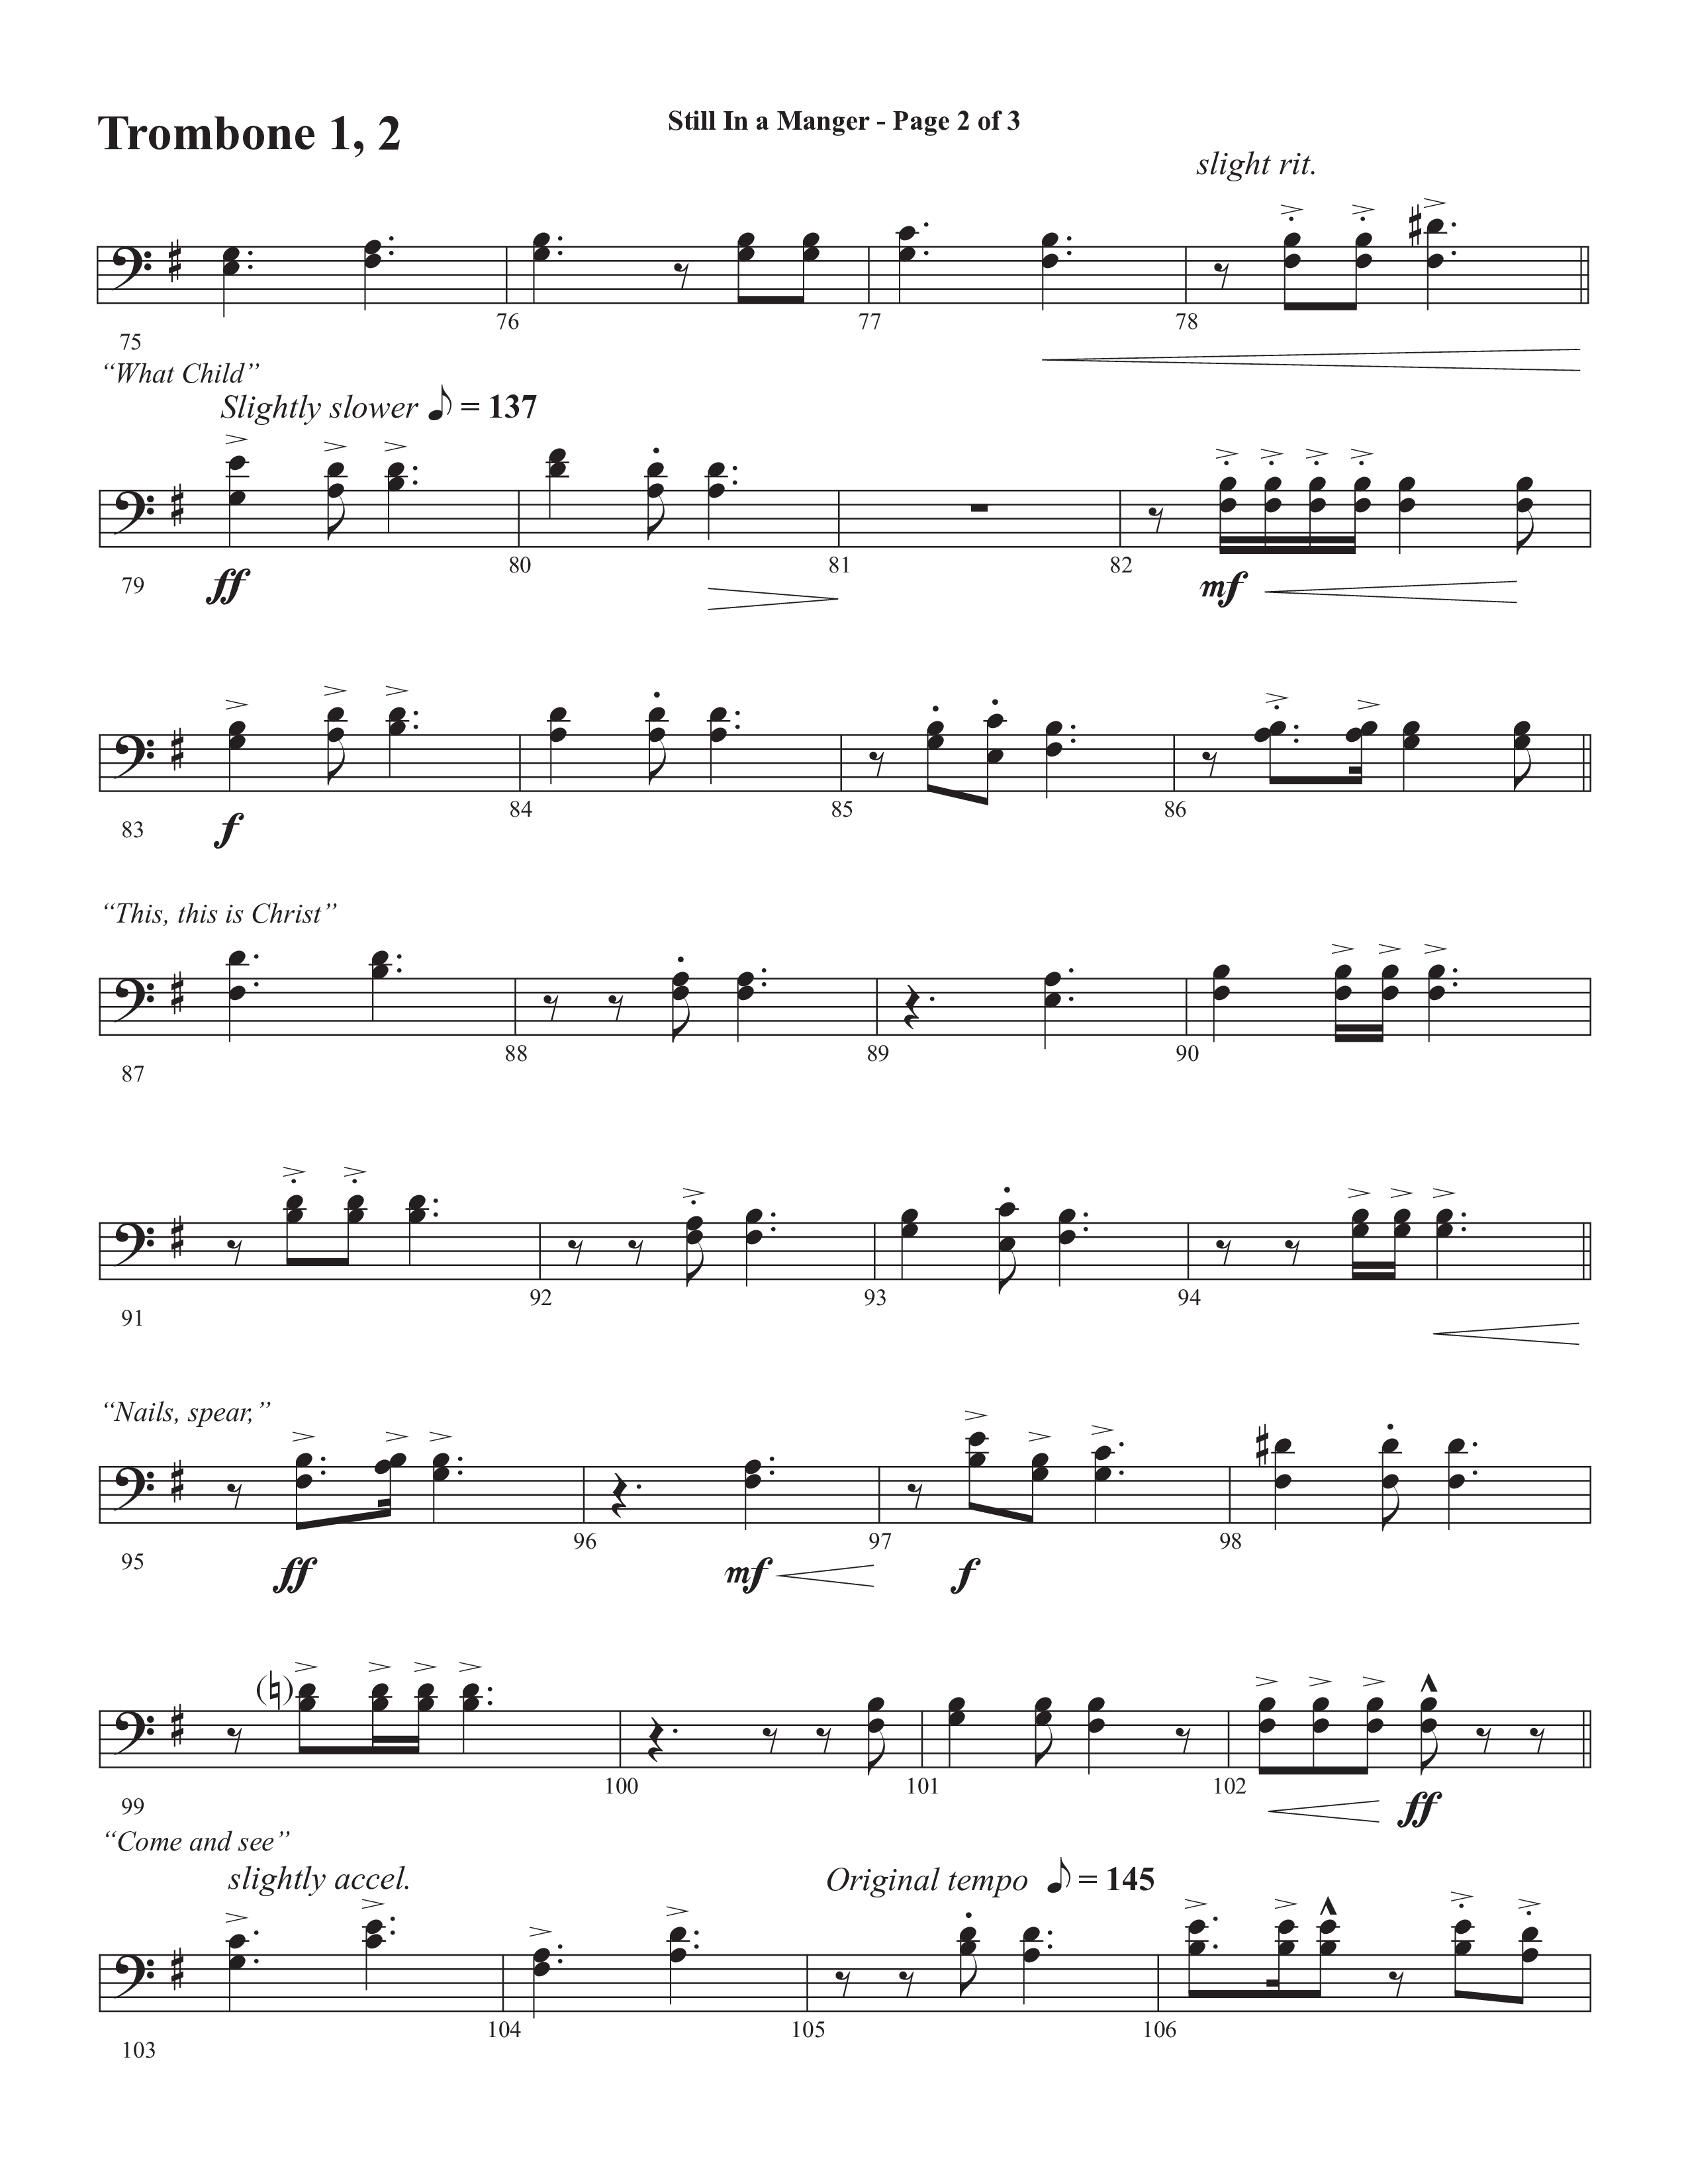 Still In A Manger with What Child Is This (Choral Anthem SATB) Trombone 1/2 (Semsen Music / Arr. Daniel Semsen)